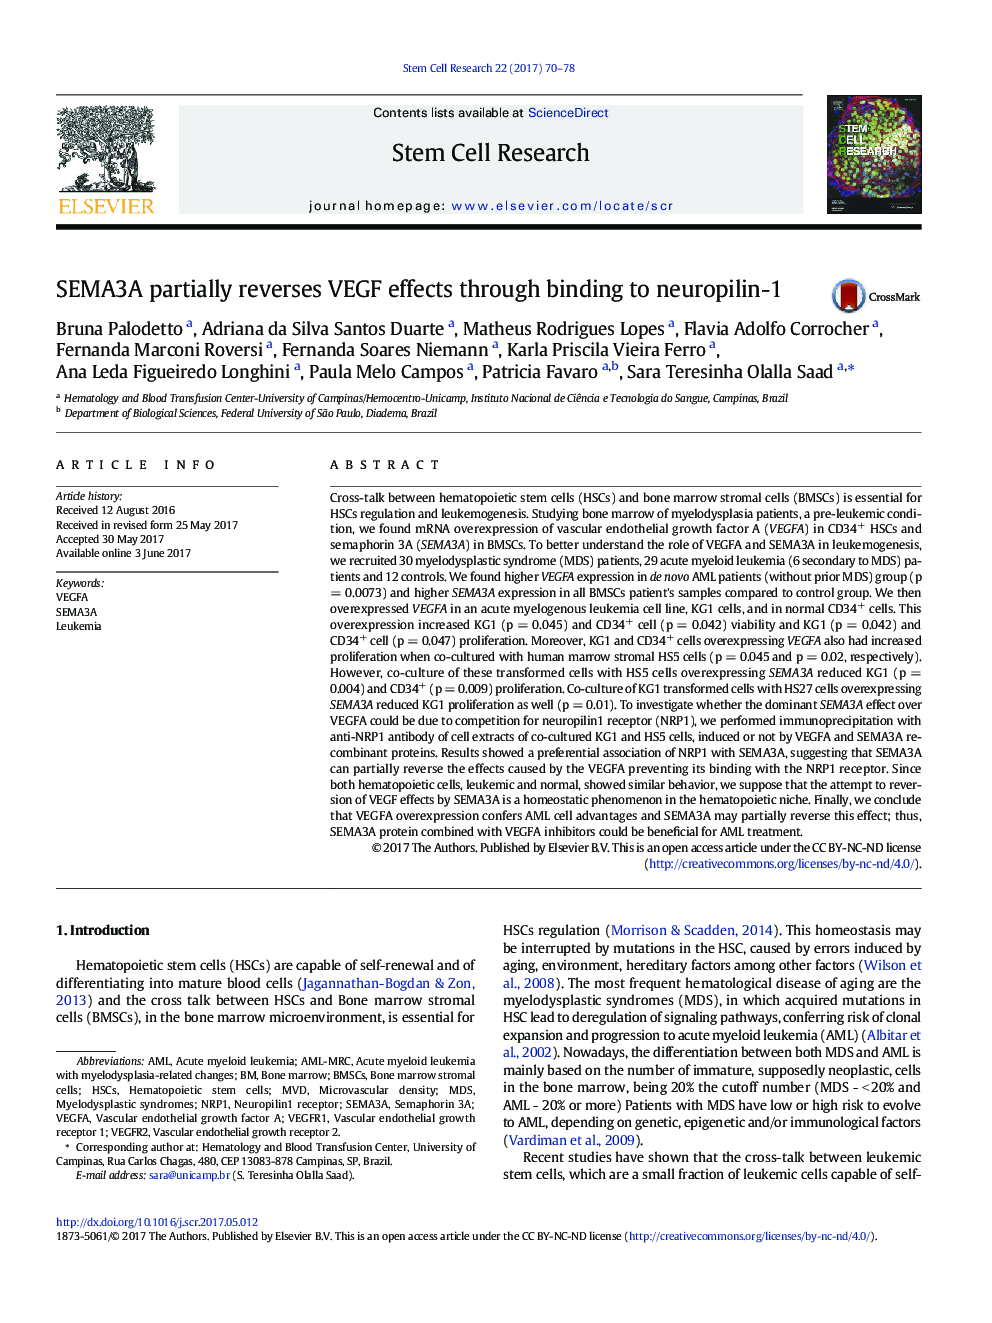 SEMA3A partially reverses VEGF effects through binding to neuropilin-1